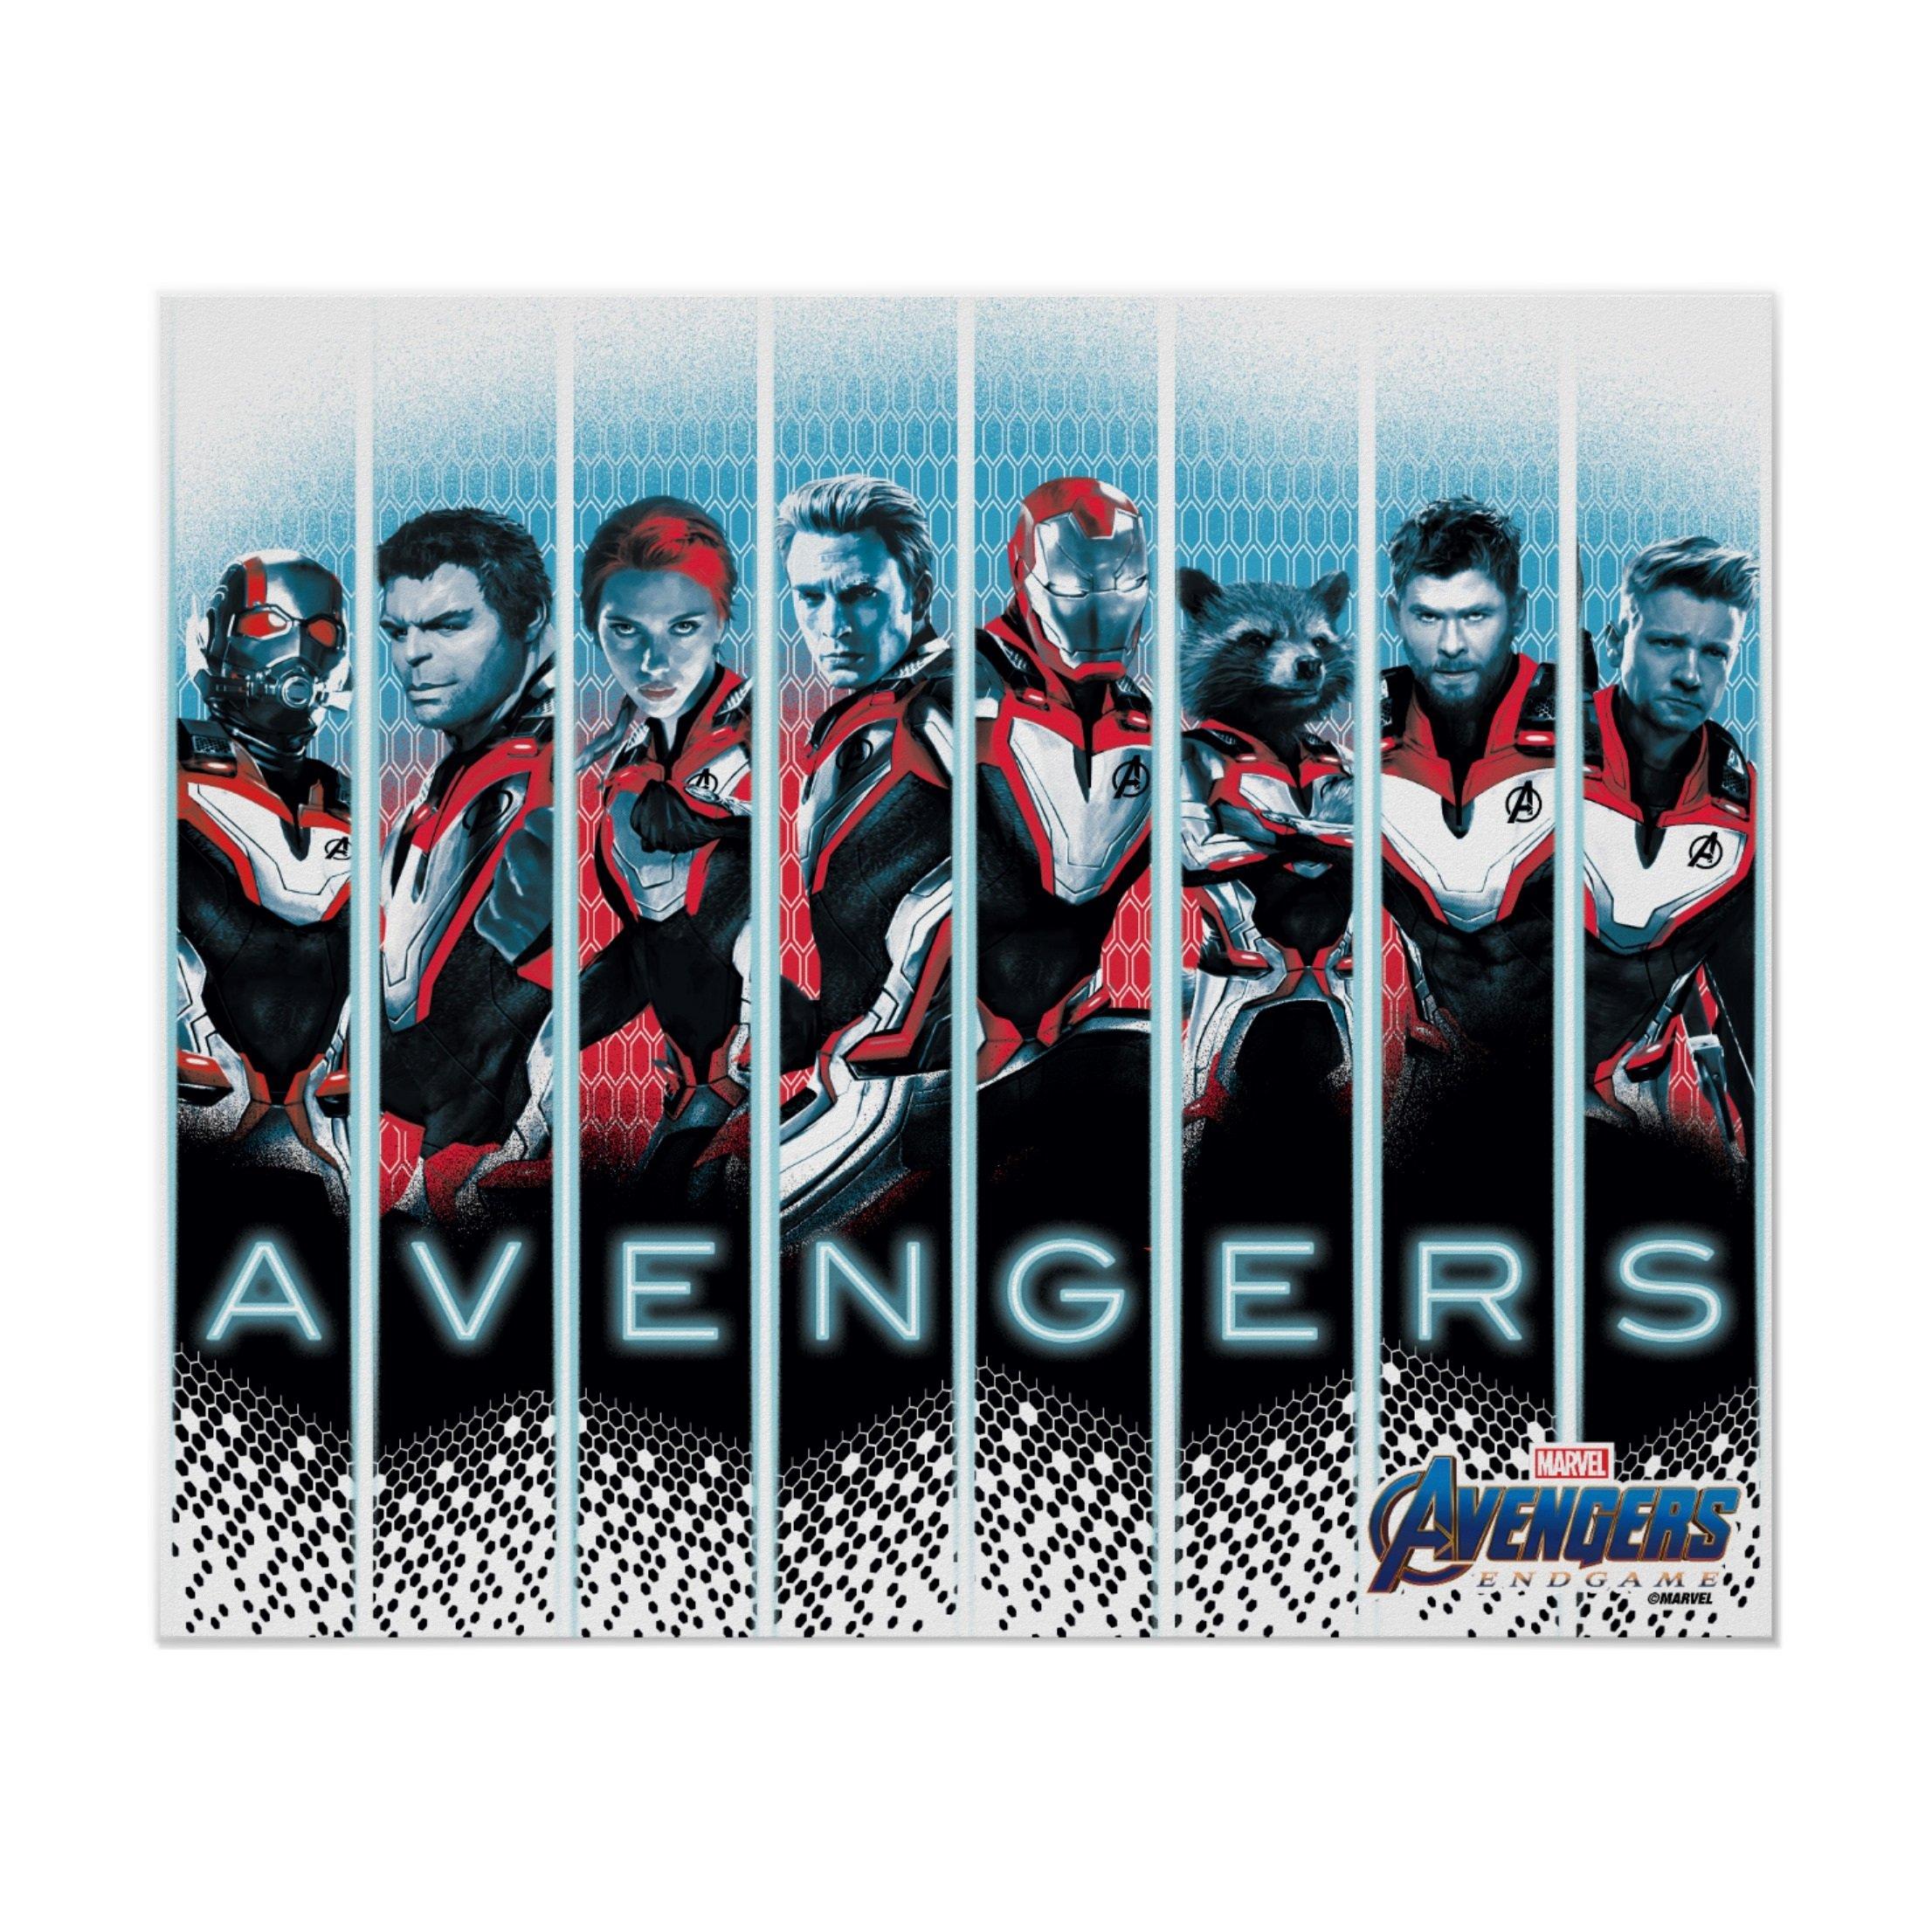 Avenger Endgame All Superheroes Batter Suit Poster Canvas